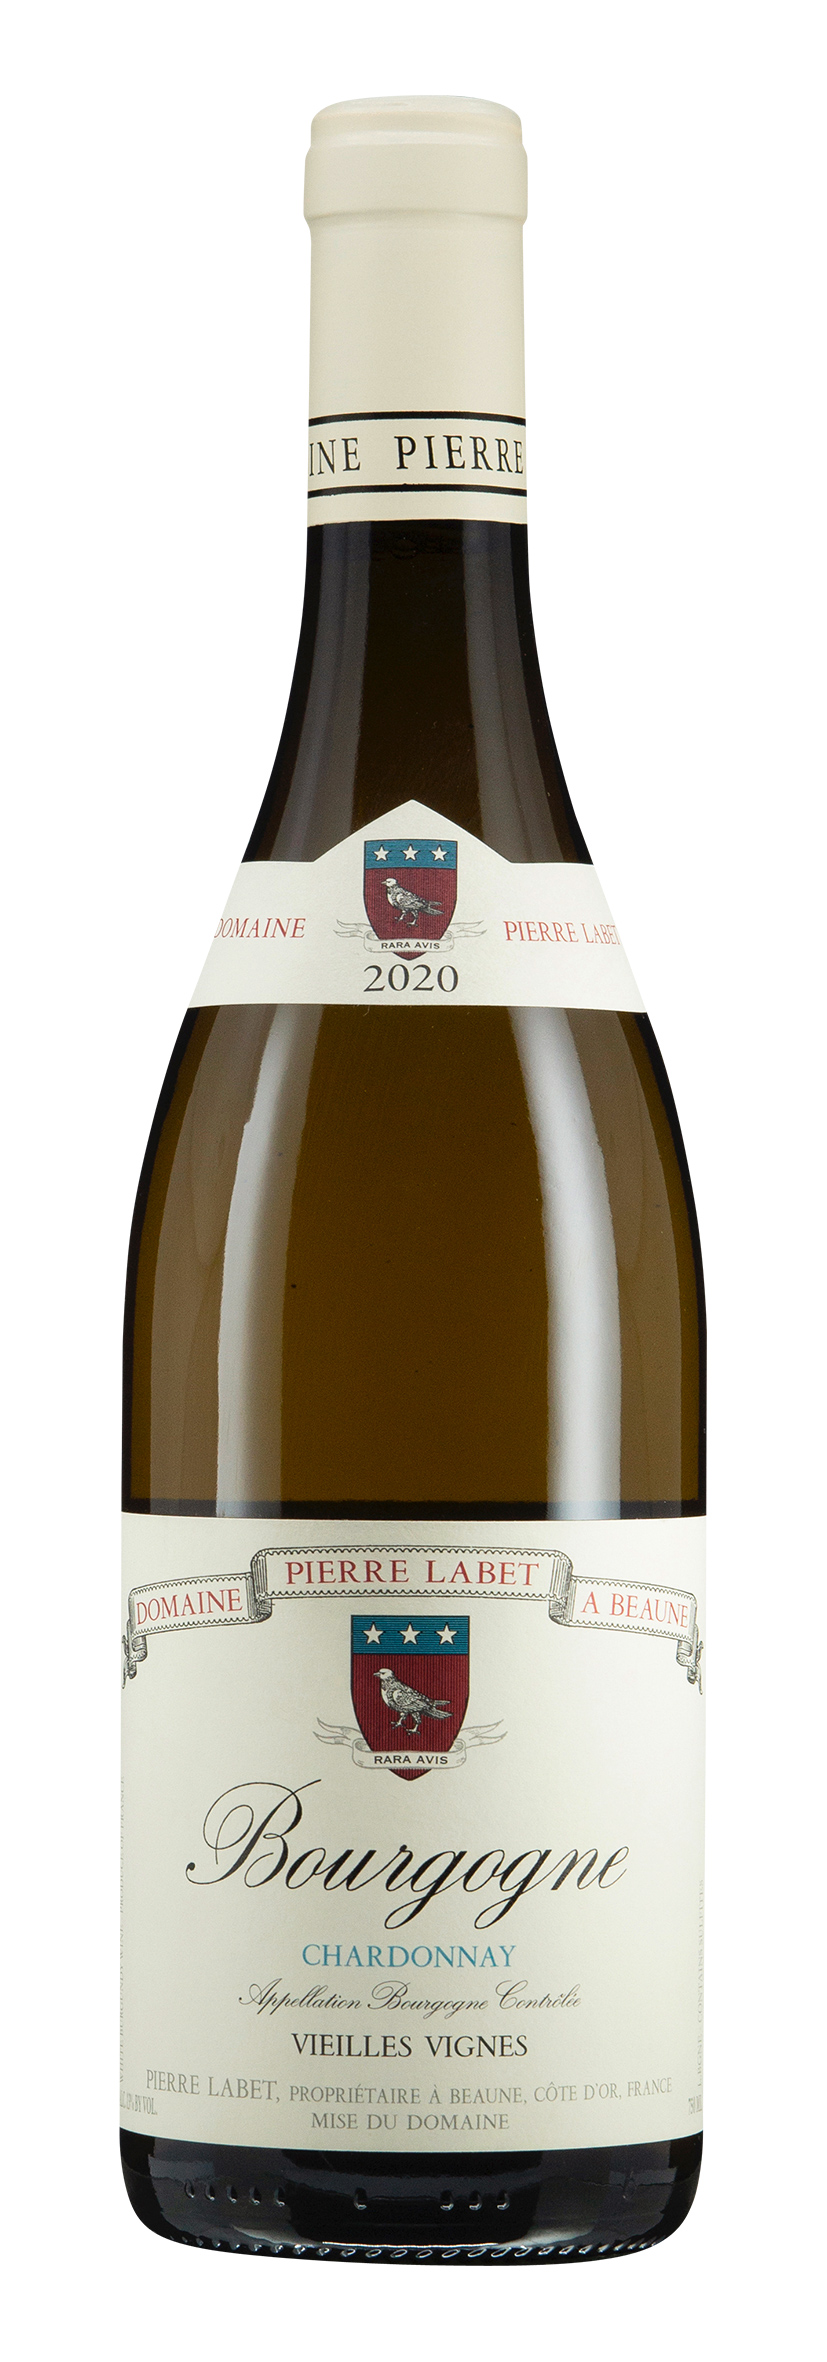 Bourgogne AOC Chardonnay Vieilles Vignes 2020